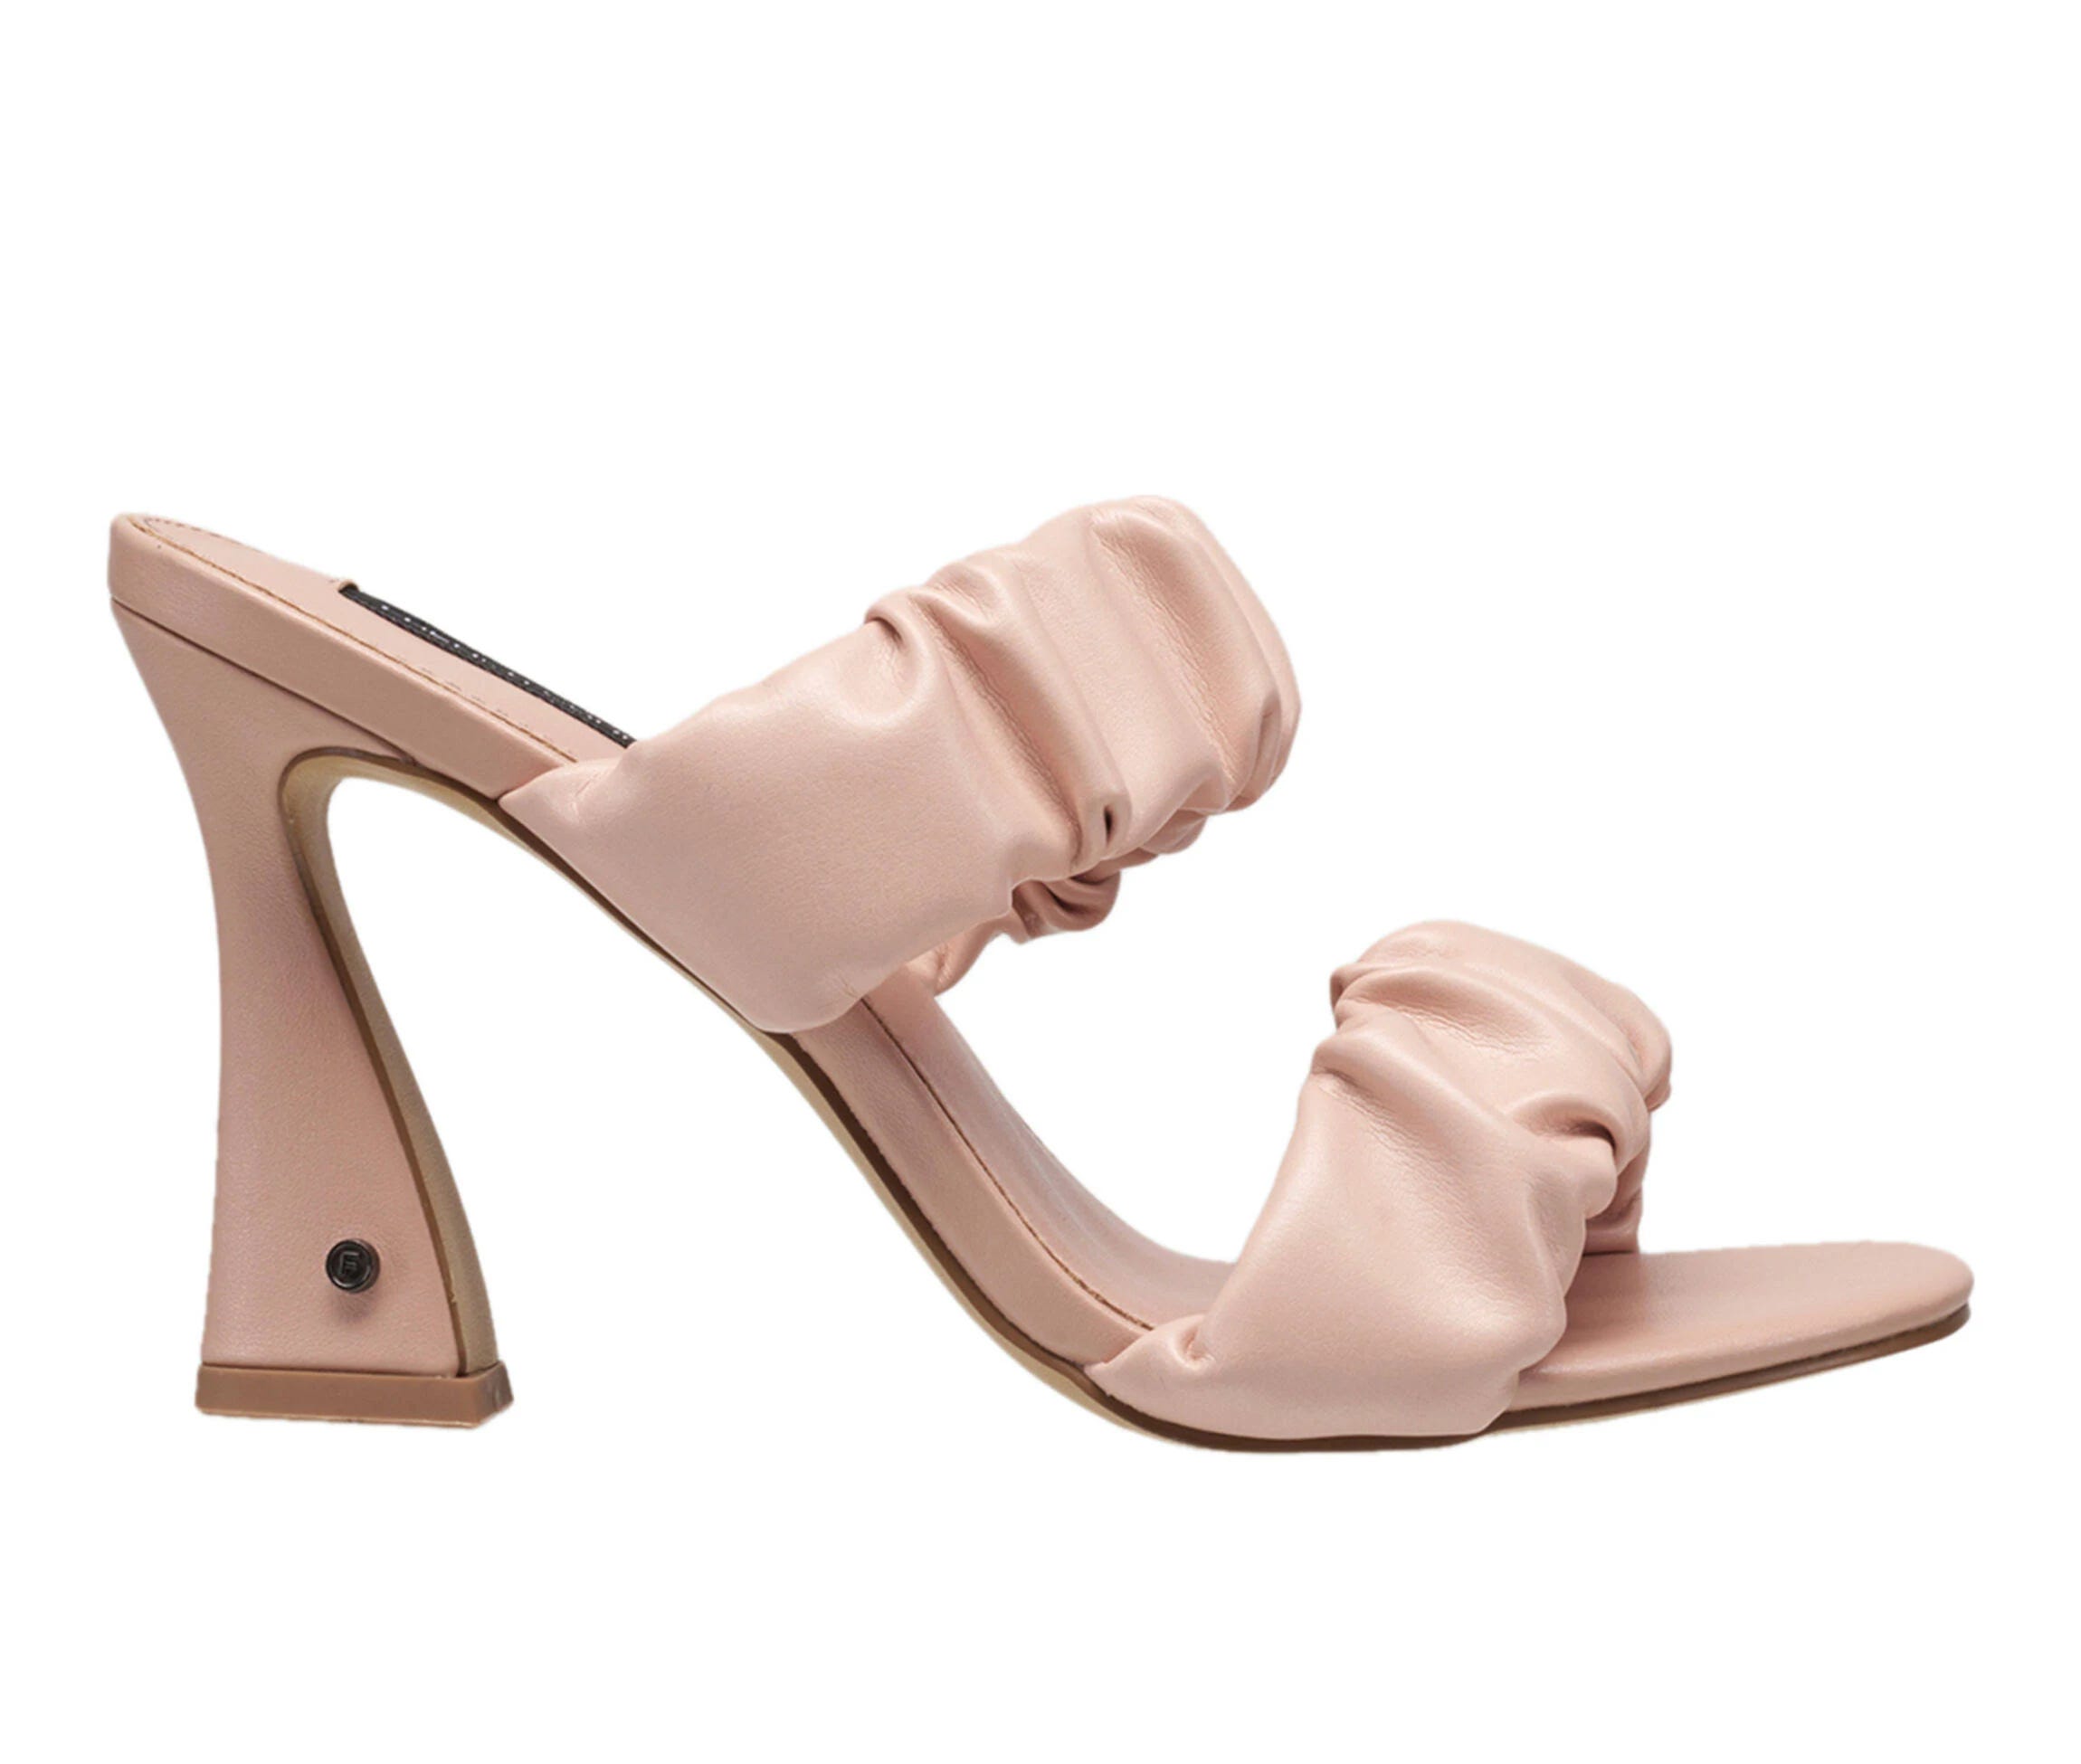 Fashionable Blush Pink Heels for Spring/Summer Wardrobe | Image